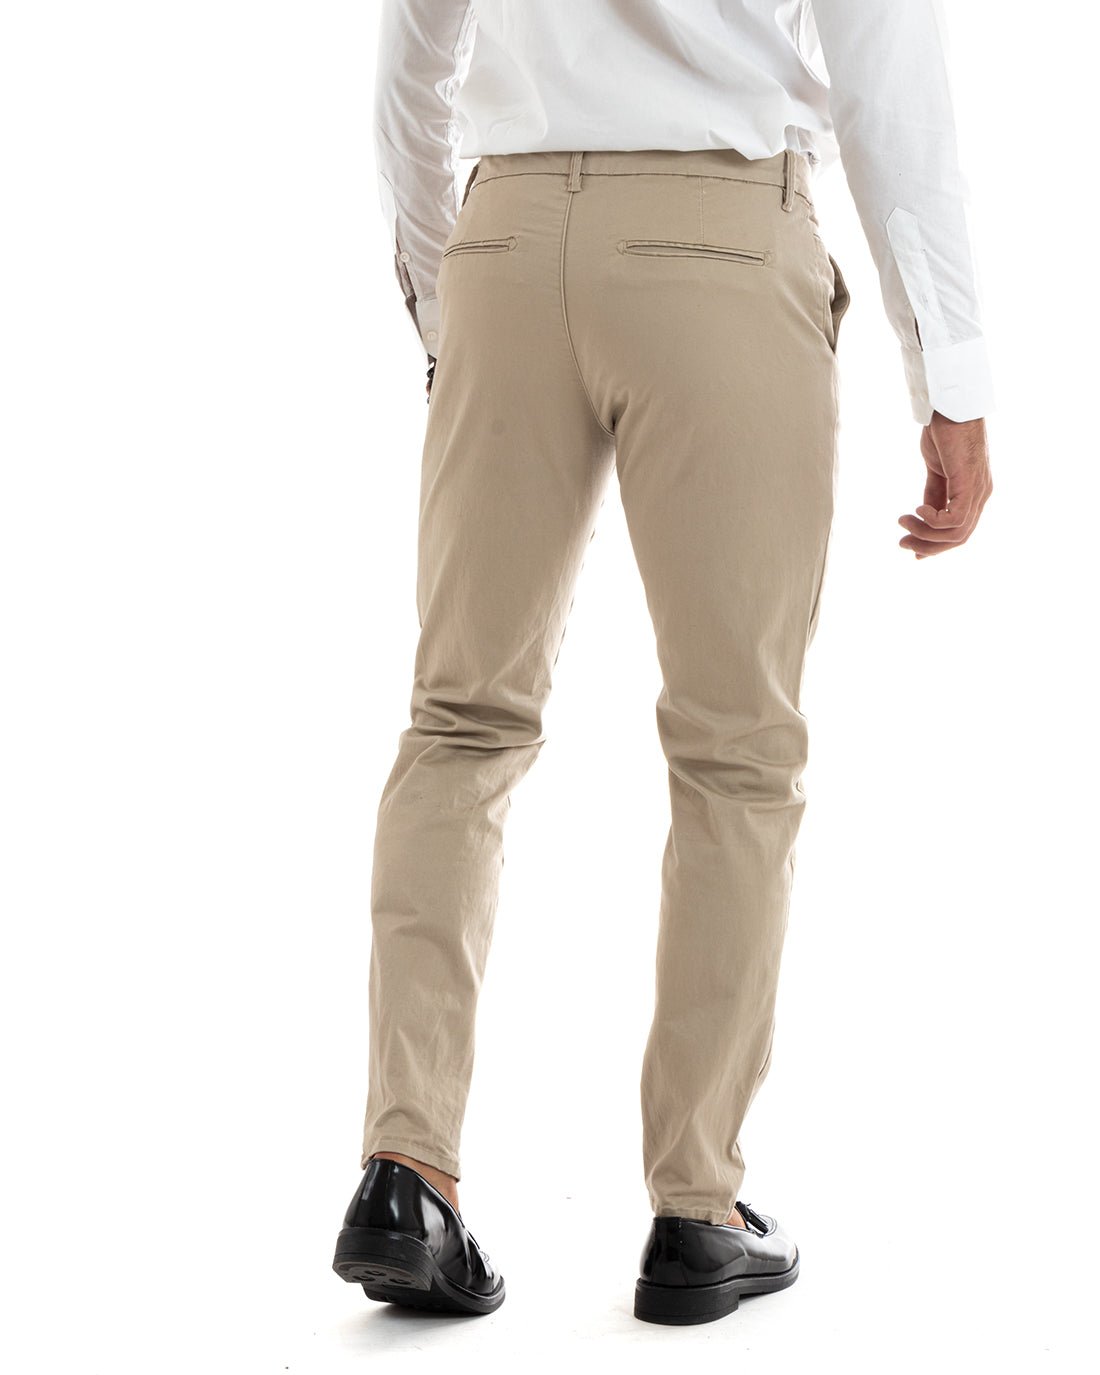 Pantaloni Uomo Cotone Raso Tasca America Slim Fit Tinta Unita Beige GIOSAL-P5970A